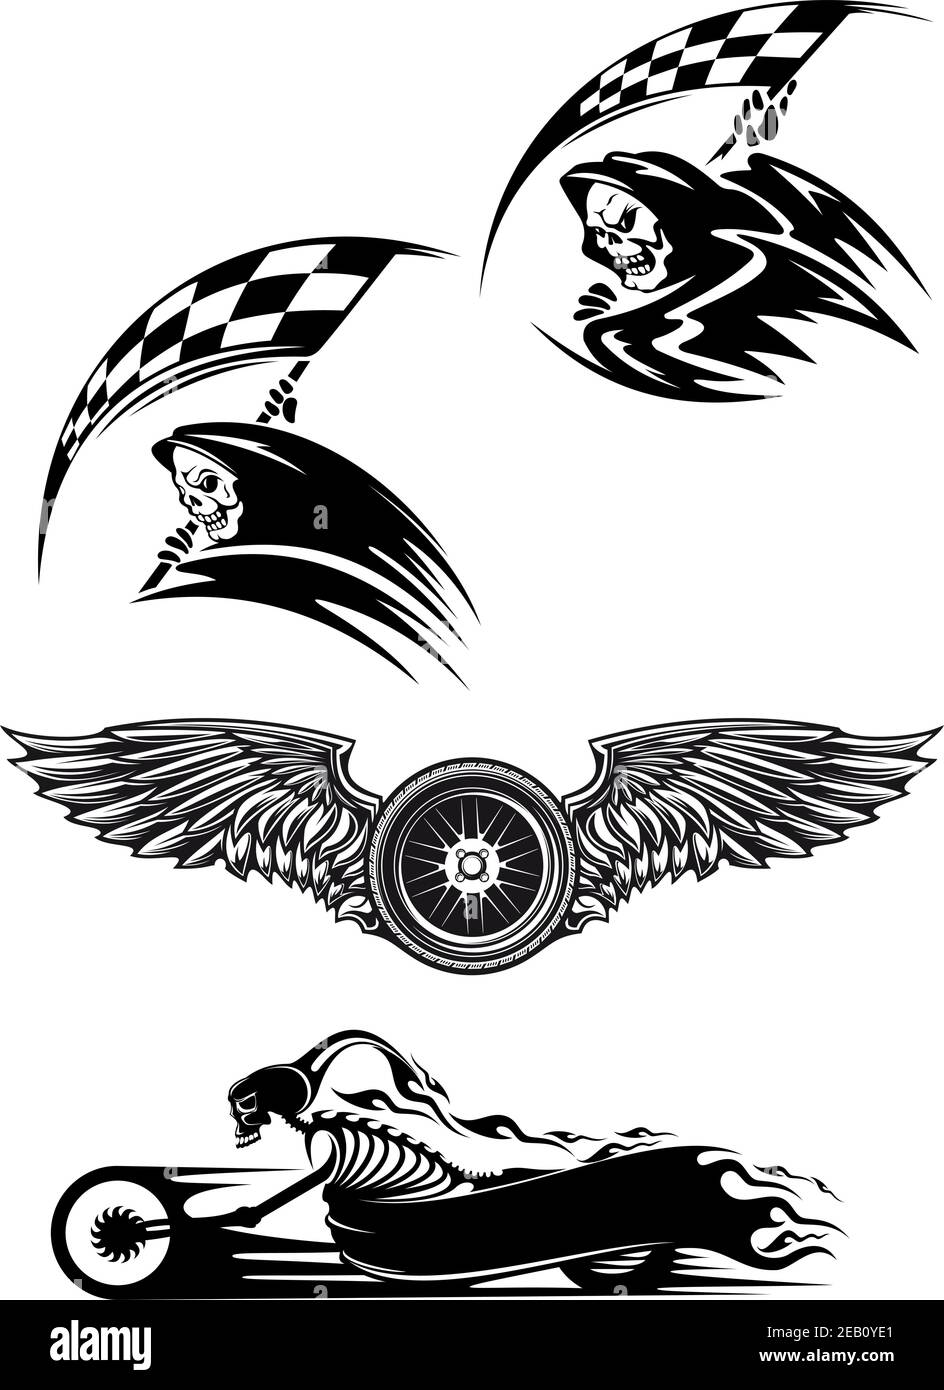 150 Tribal Motorcycle Tattoos Silhouette Illustrations RoyaltyFree  Vector Graphics  Clip Art  iStock